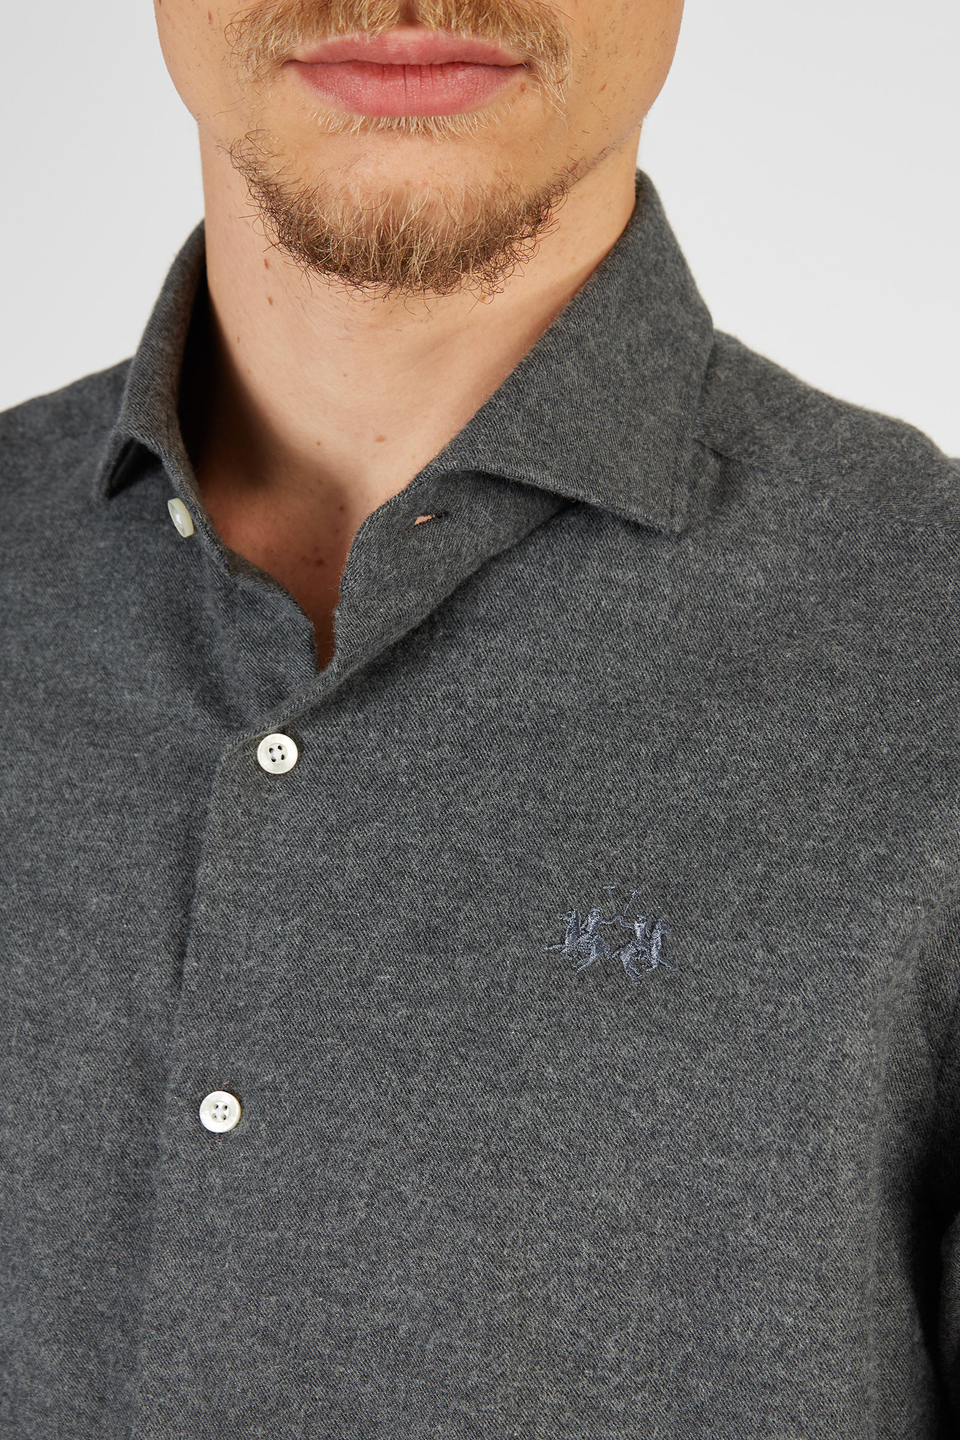 Blue Ribbon Herrenhemd mit langen Ärmeln aus Flanell Comfort Fit | La Martina - Official Online Shop